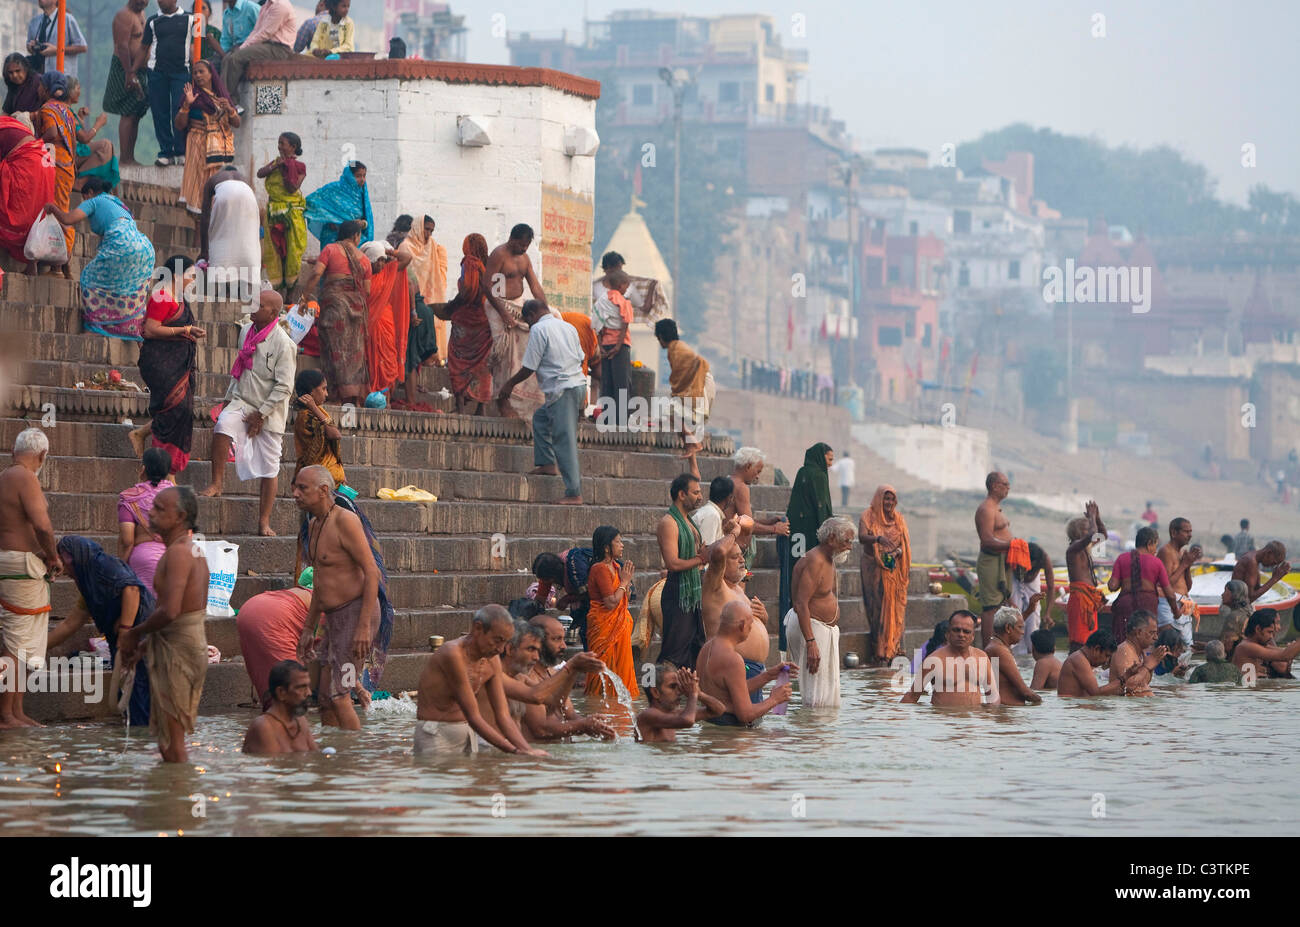 Indian pilgrims bathing in the River Ganges, Varanasi, Uttar Pradesh, India. Religious pilgrimage for Hindu people Stock Photo